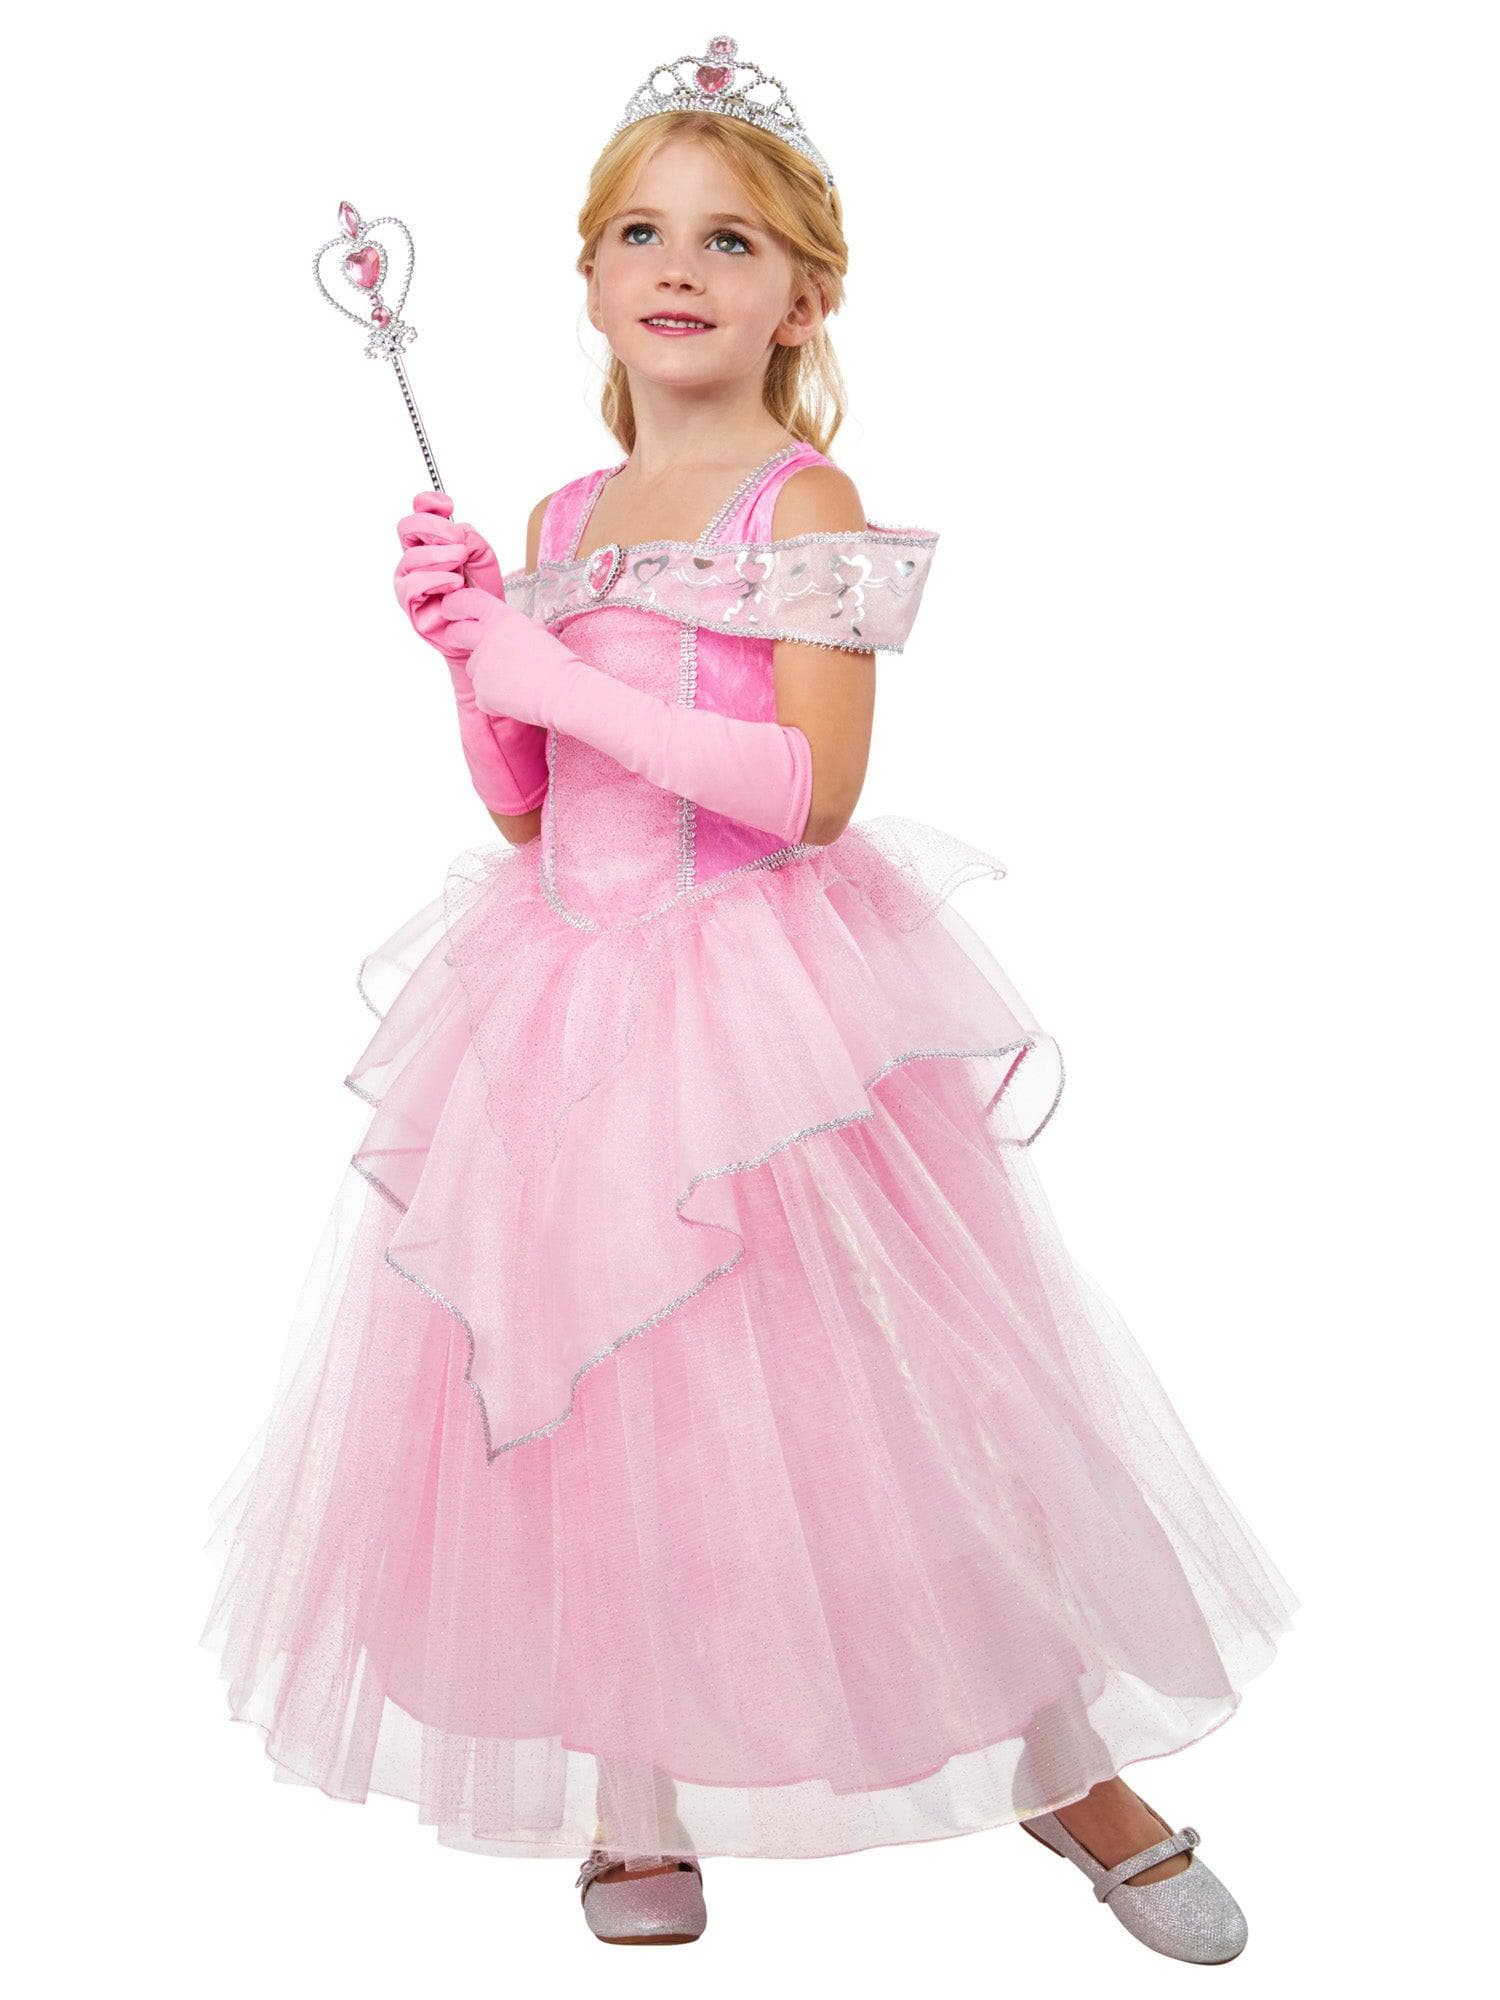 Pink Princess Kids Costume - costumes.com